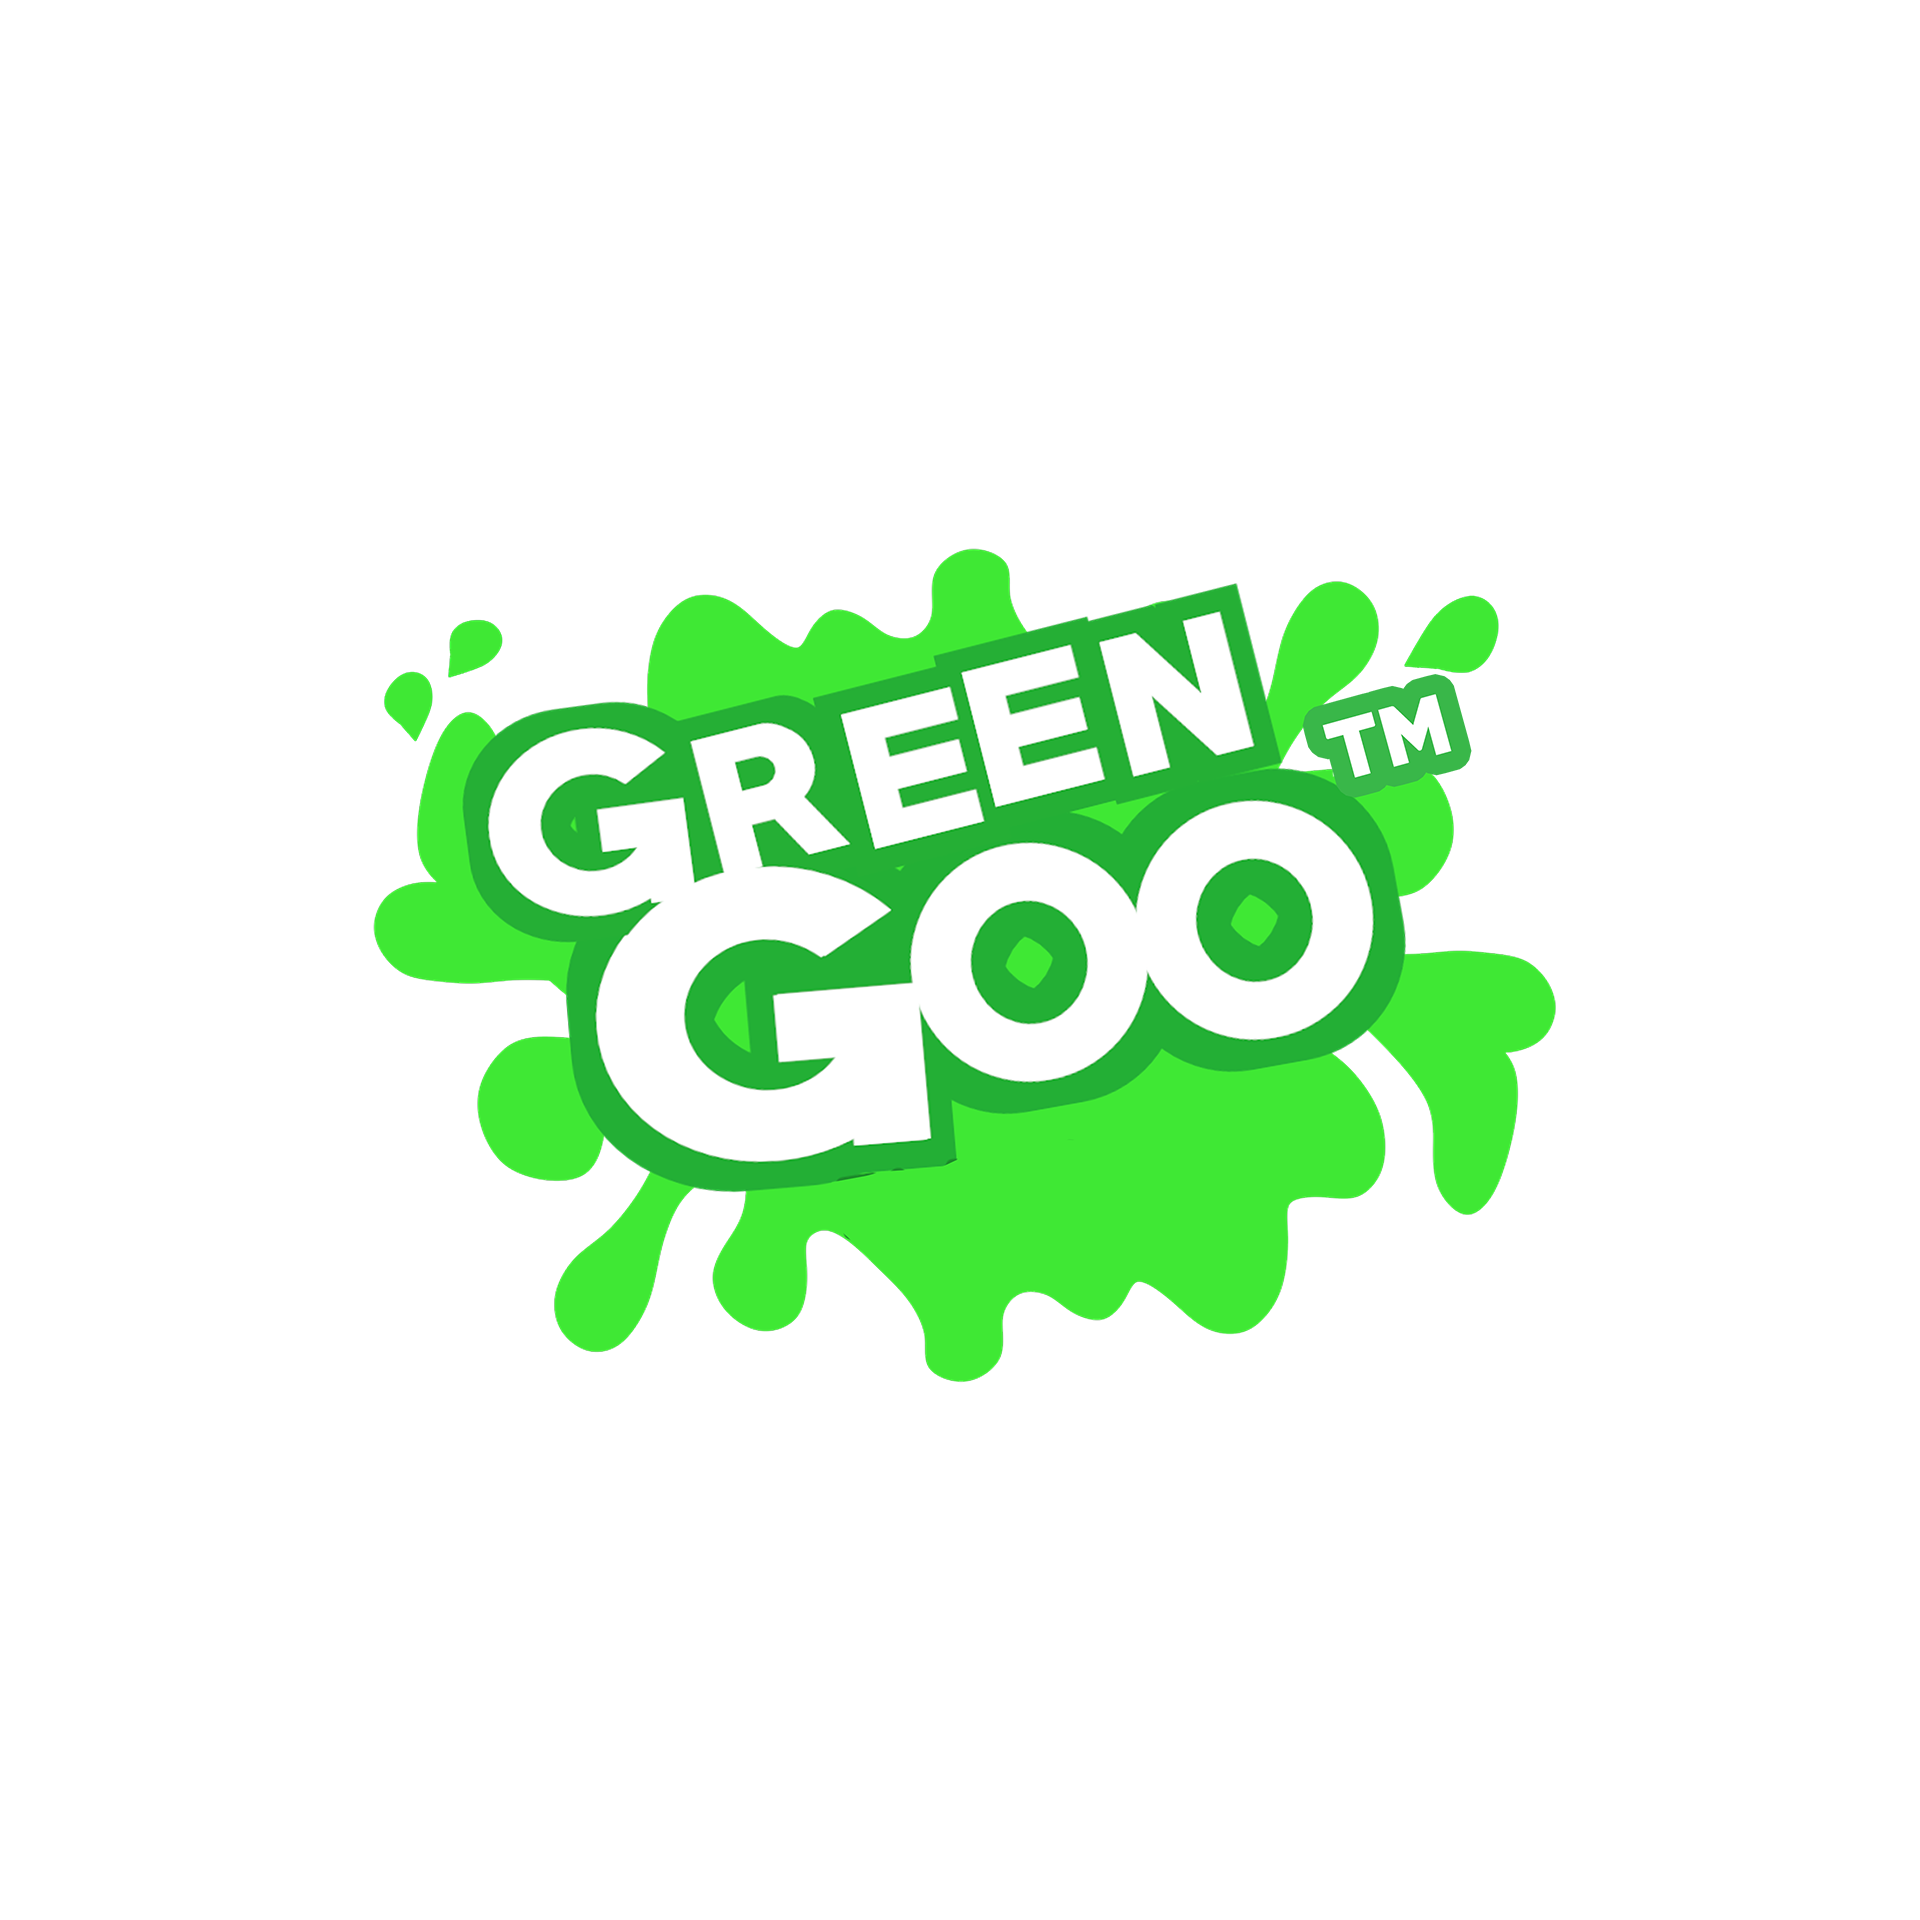 GreenGoo